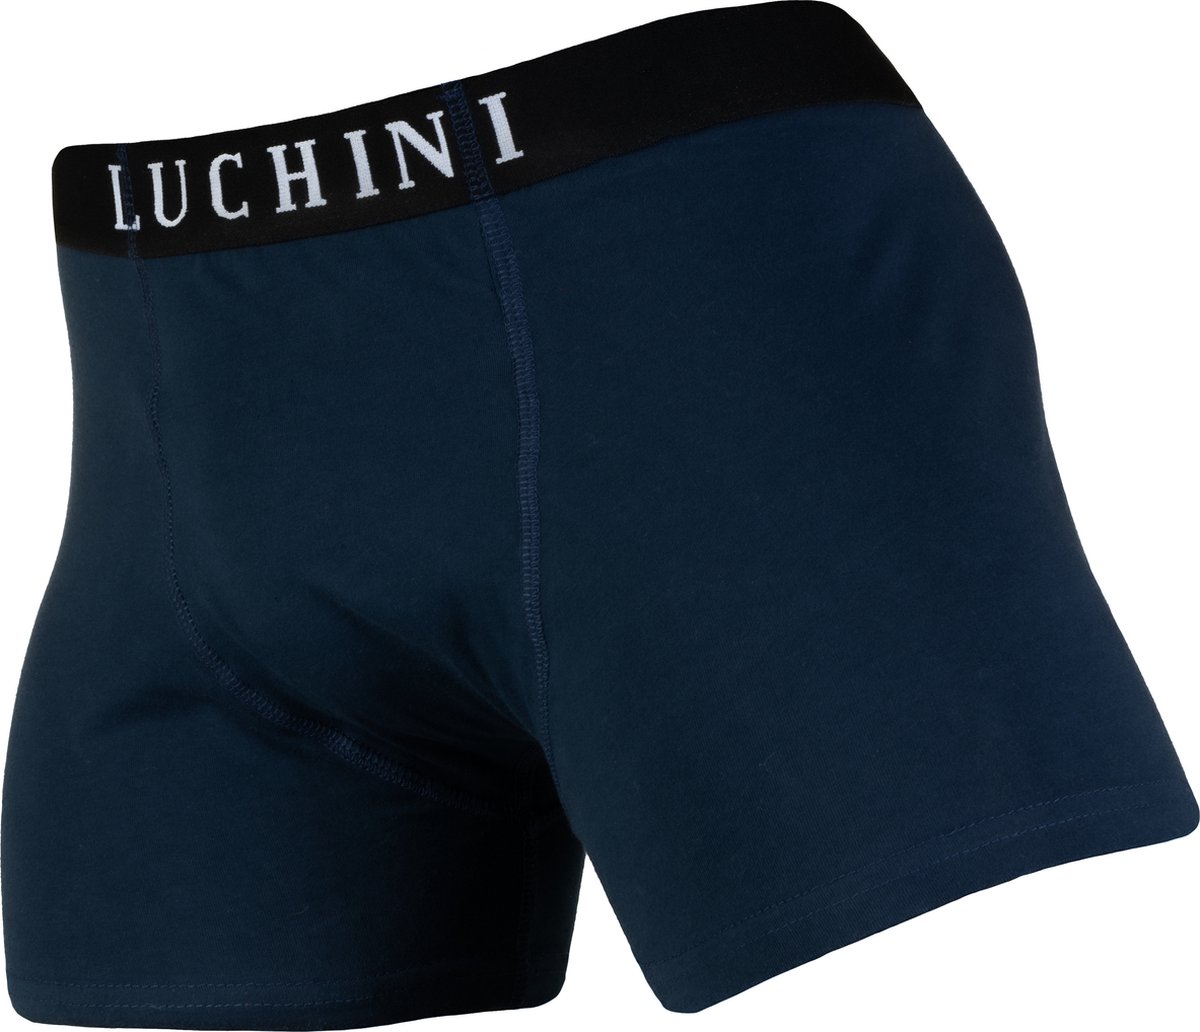 Luchini Clothing ® - LC Classic Maat S - Premium Boxershorts heren - Heren Privacy Boxers met verborgen vak - 2-PACK boxershorts - Stealth boxers - Blauw